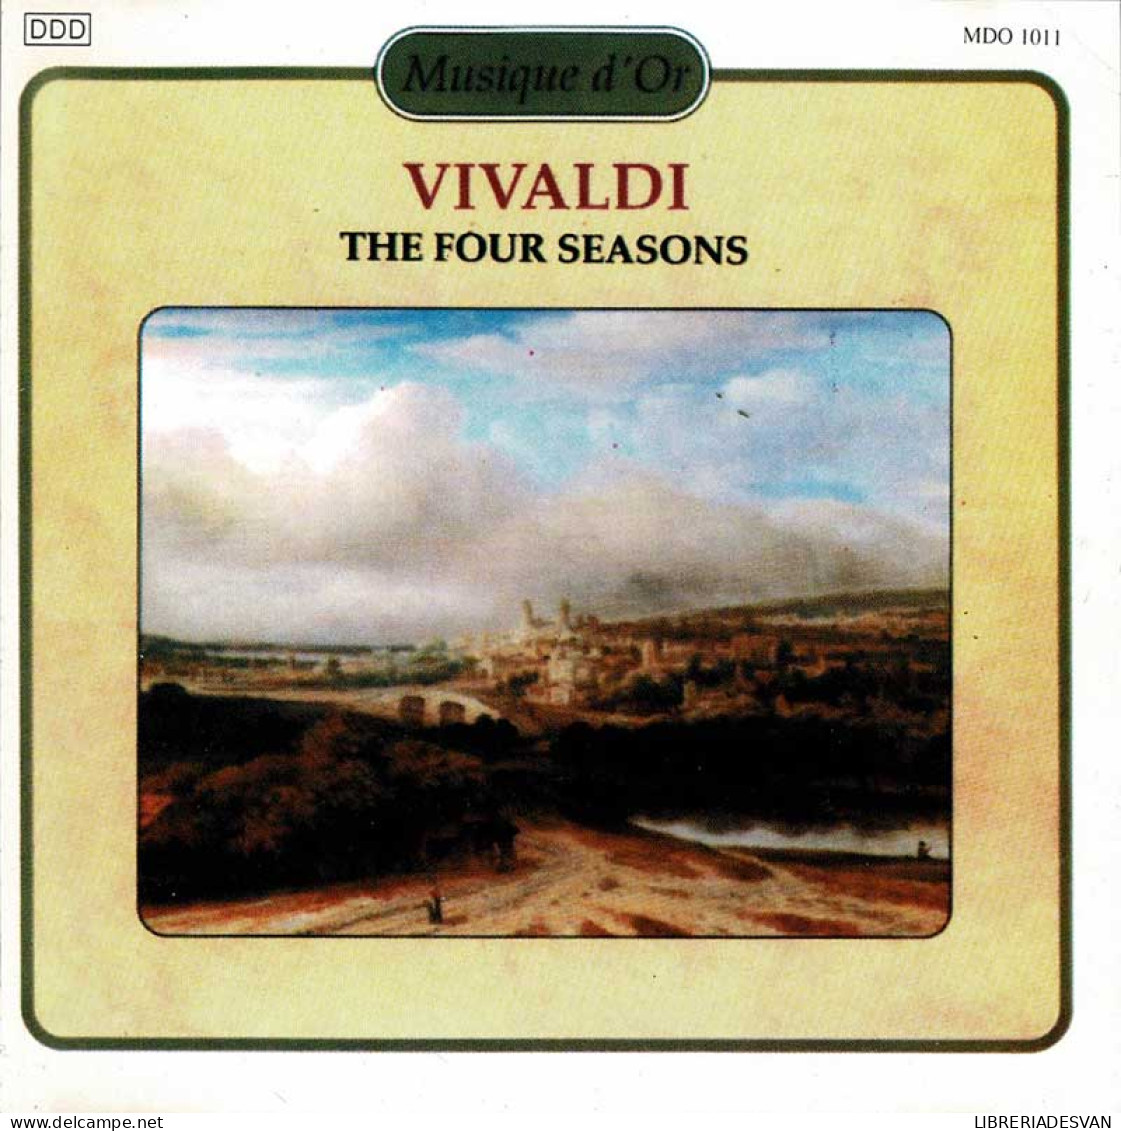 Vivaldi - The Four Seasons. CD - Classical